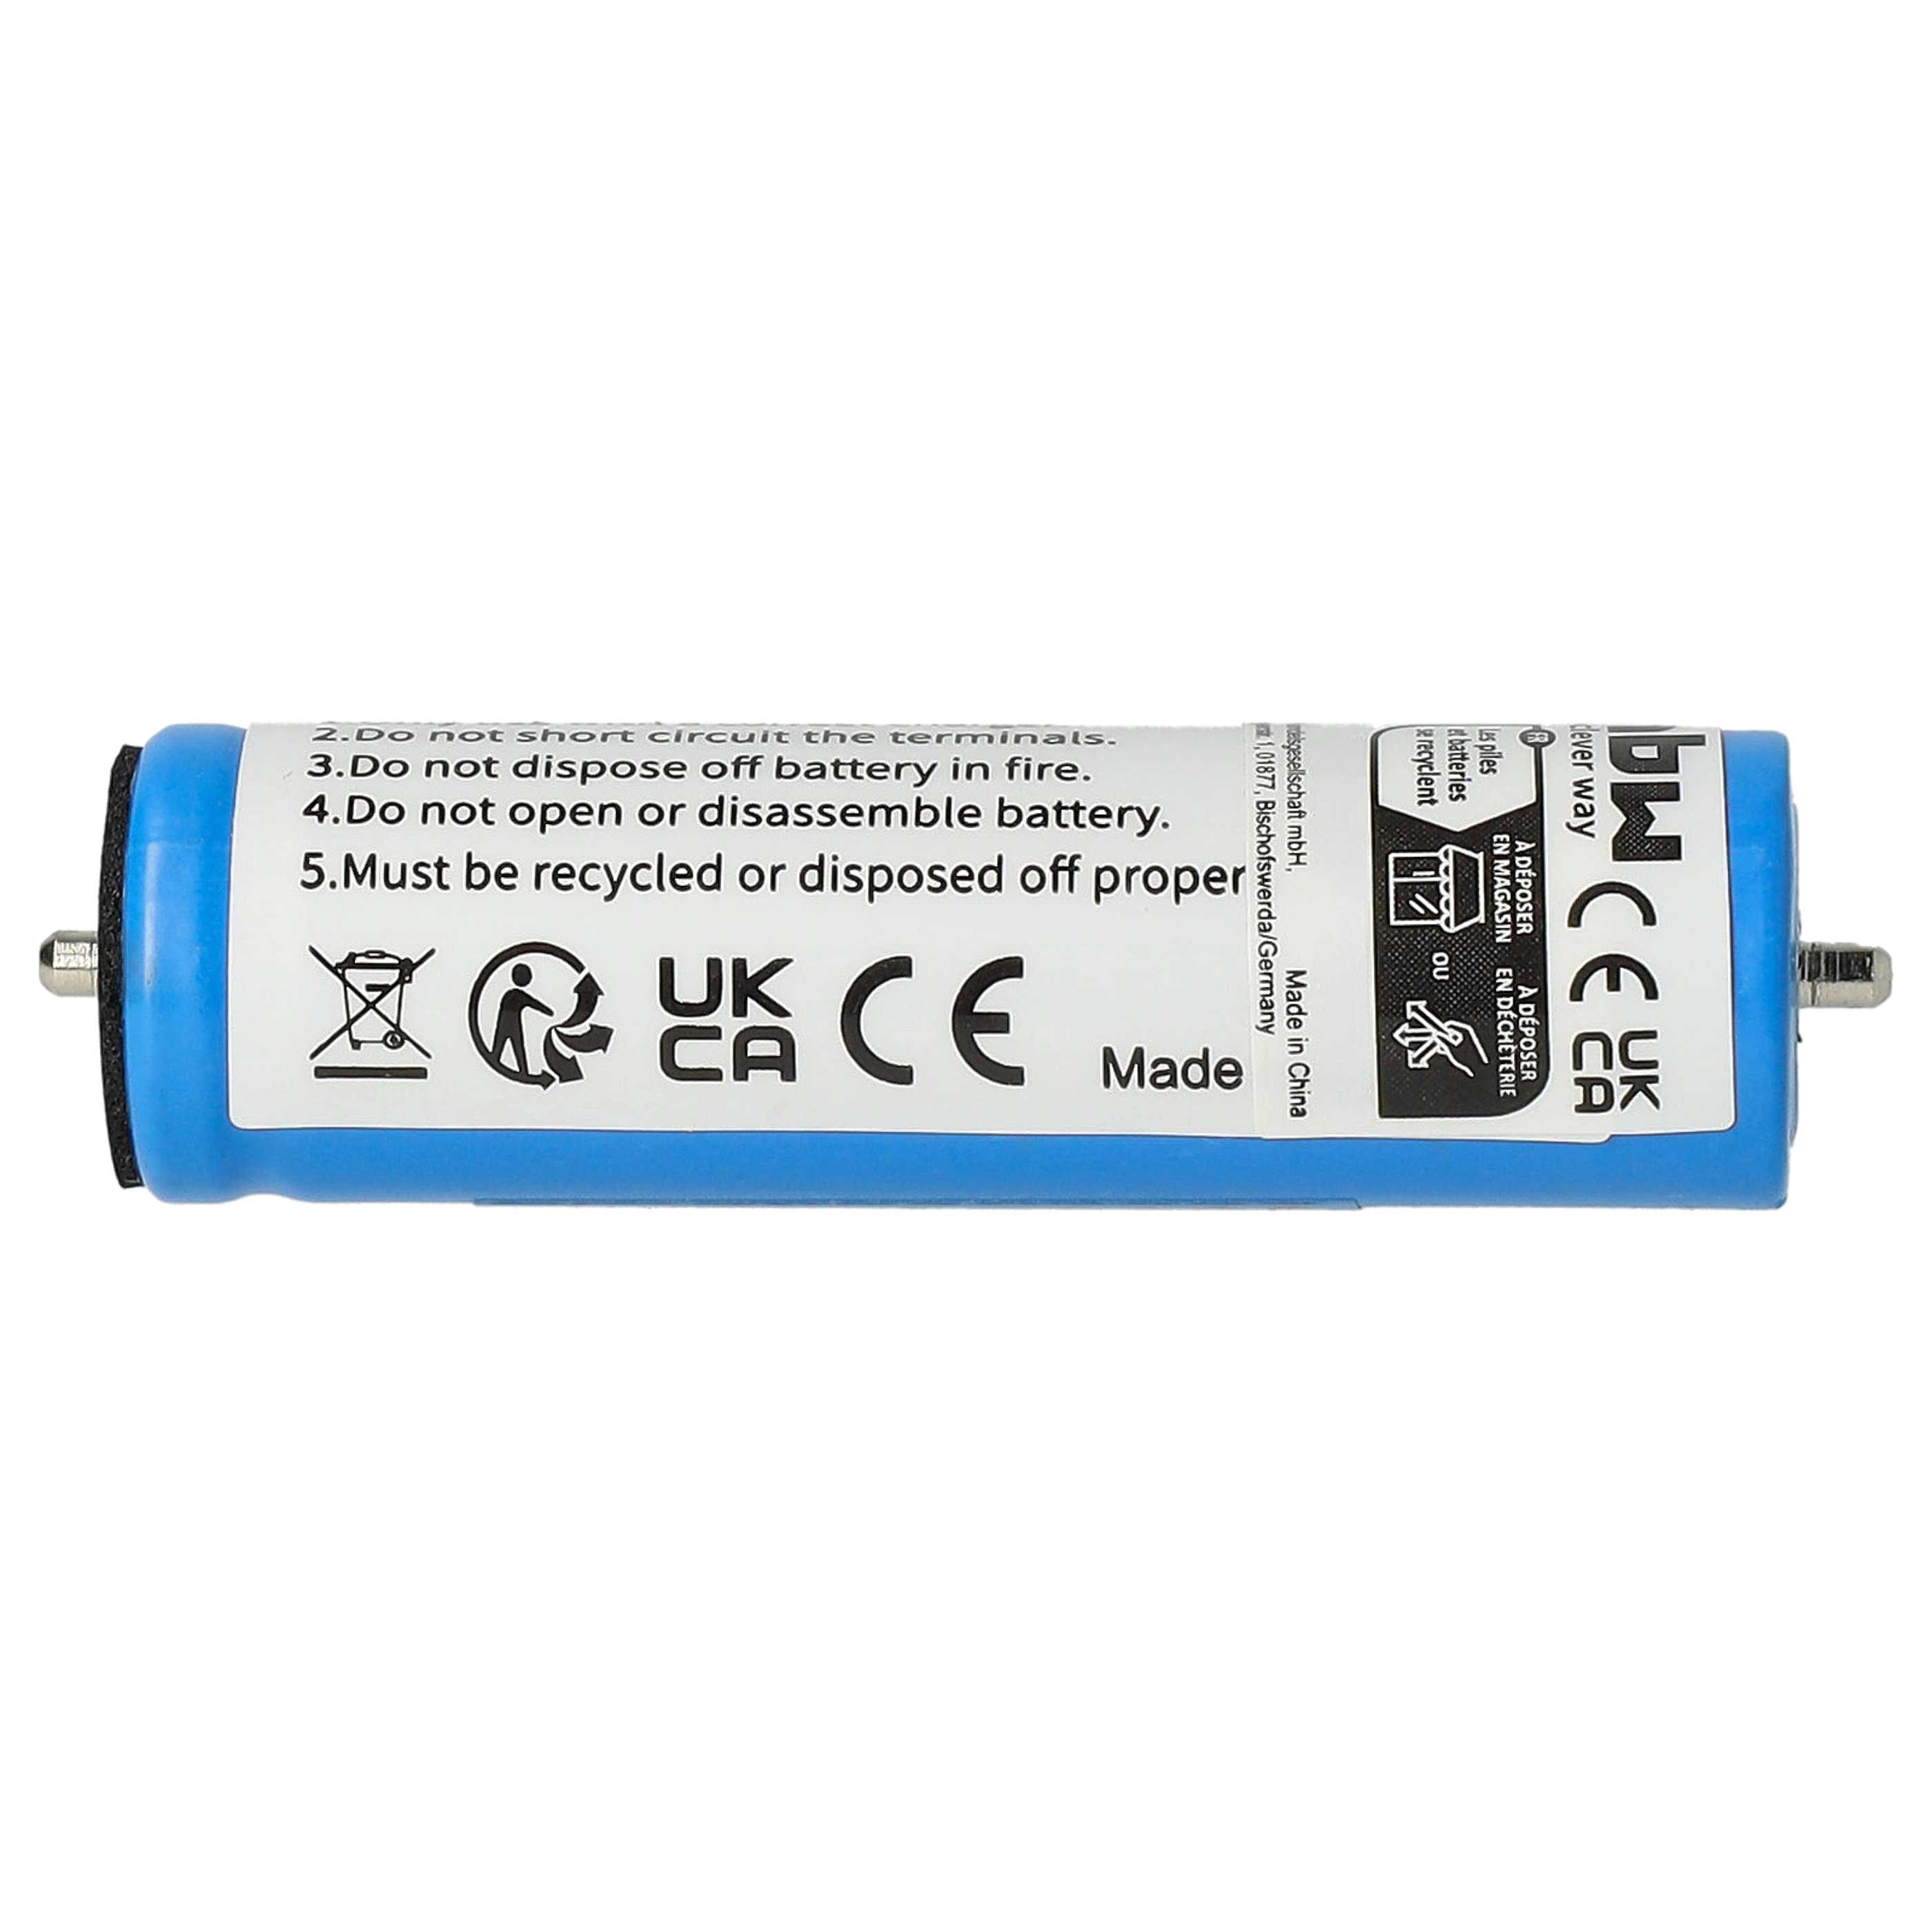 Batteria per rasoio sostituisce Panasonic WES8163L2505, V9ZL2508, K0360-0570 Panasonic - 680mAh 3,6V Li-Ion